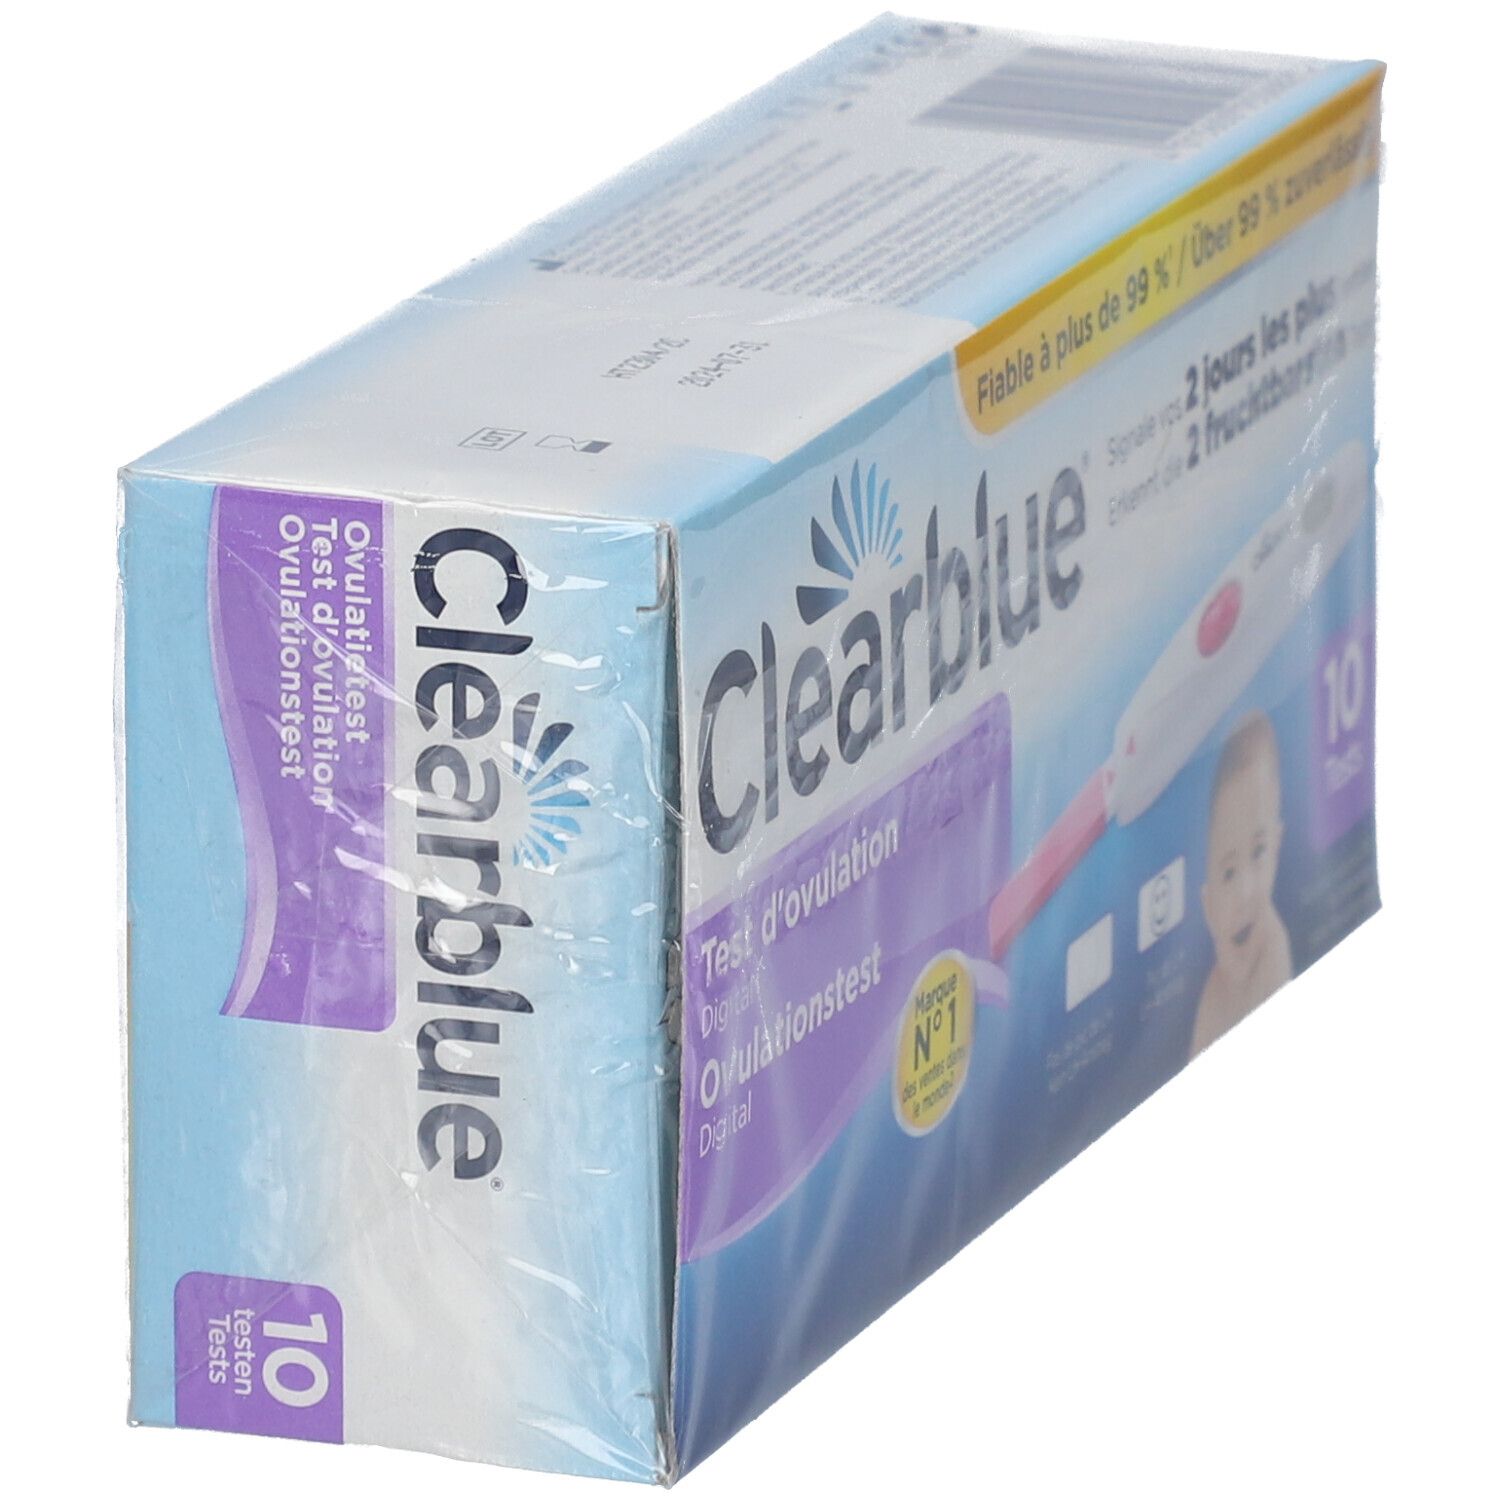 Clearblue® Ovulationstest Digital